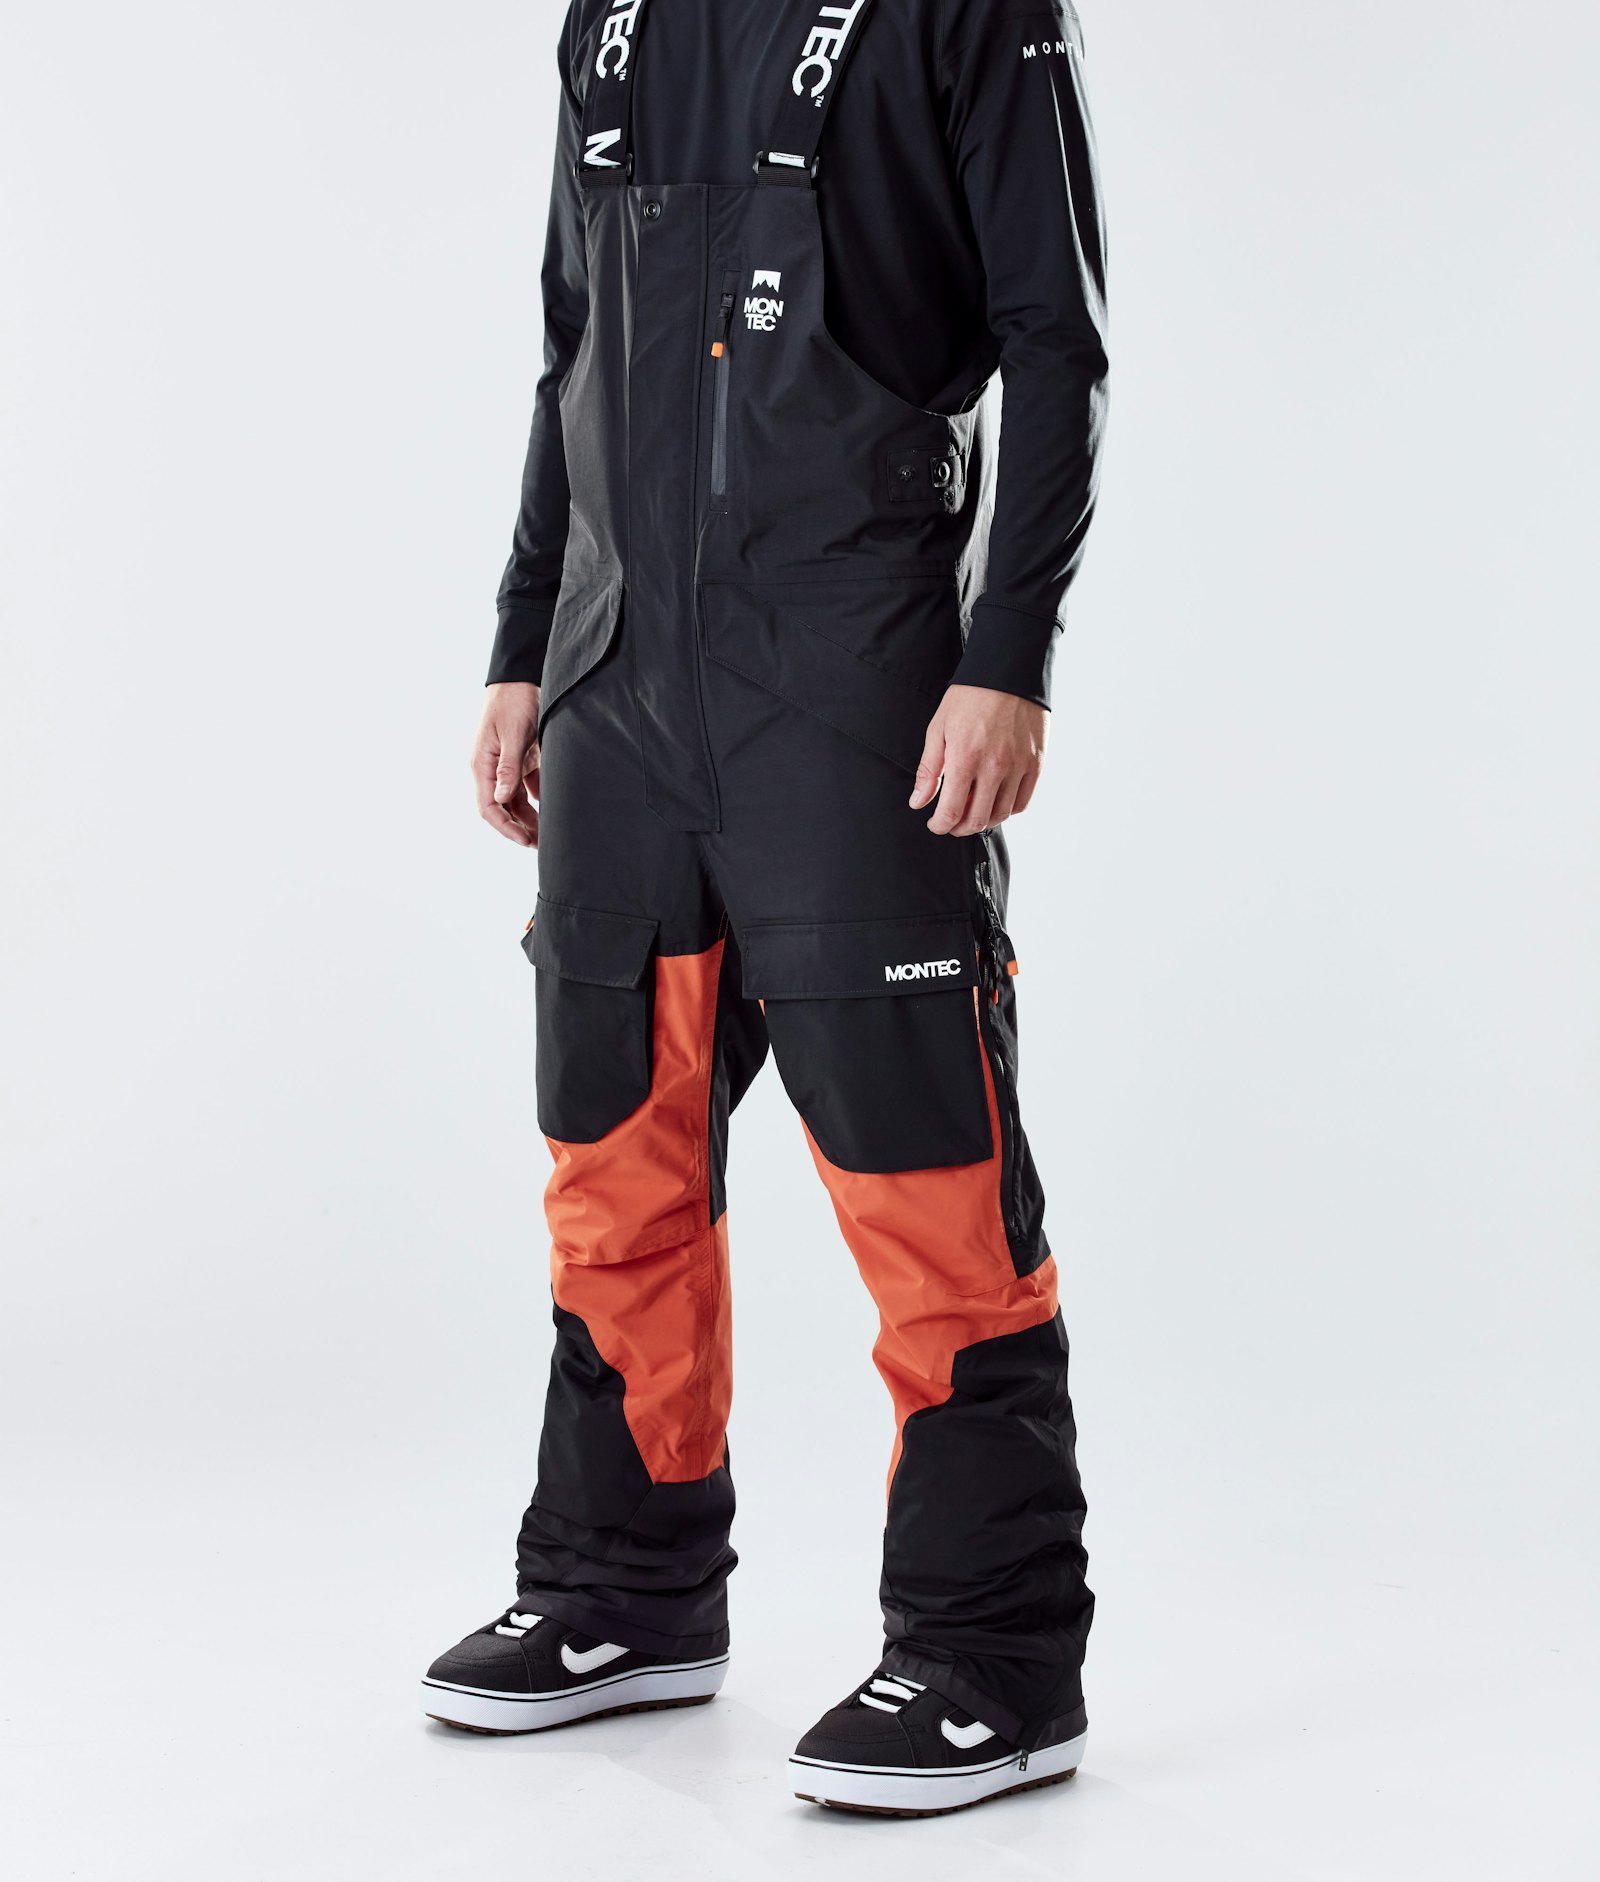 Fawk 2020 Pantalon de Snowboard Homme Black/Orange